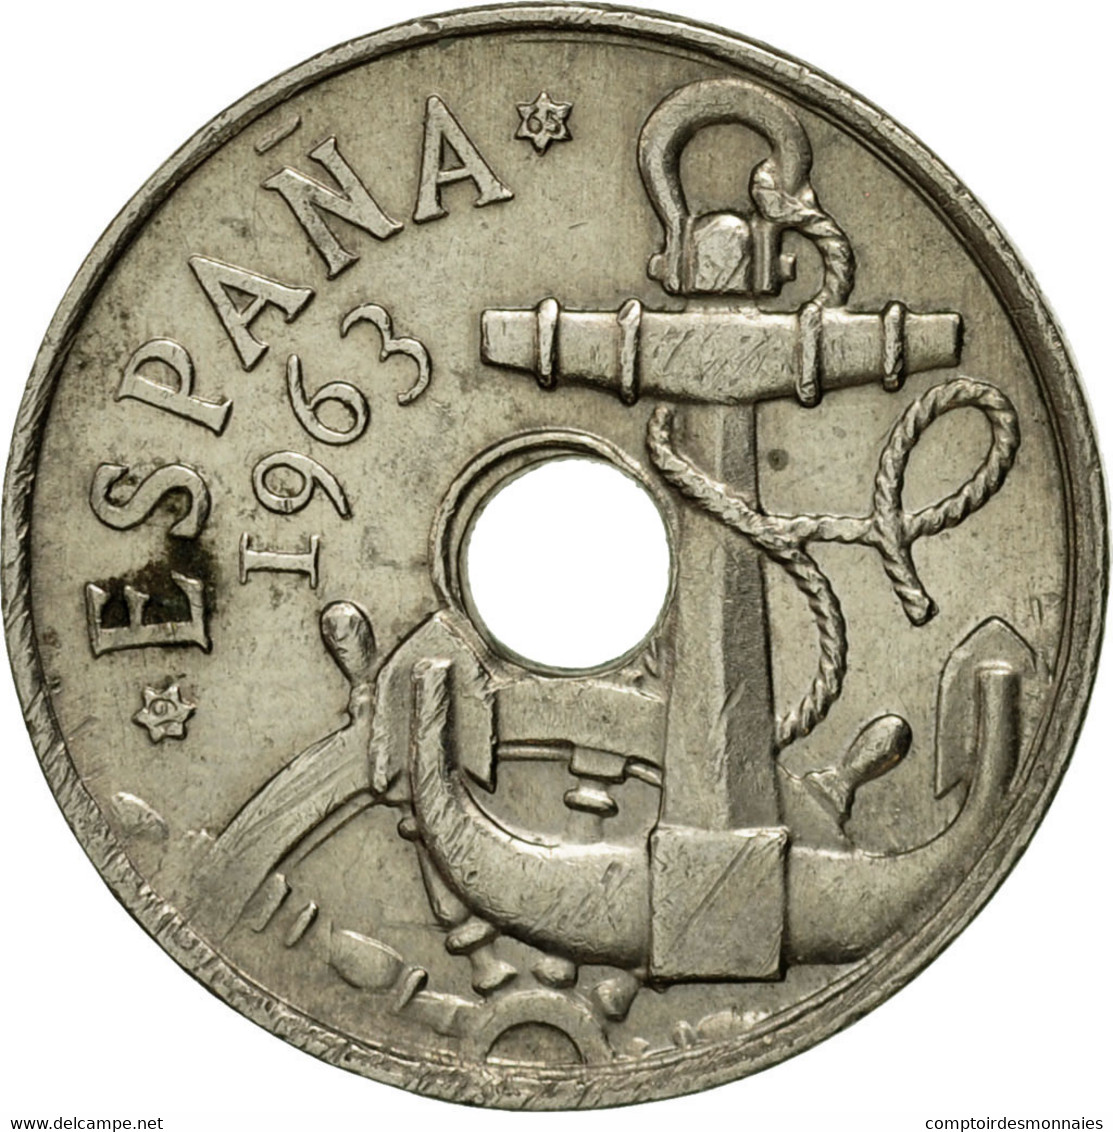 Monnaie, Espagne, Francisco Franco, Caudillo, 50 Centimos, 1965, TTB - 50 Centimos